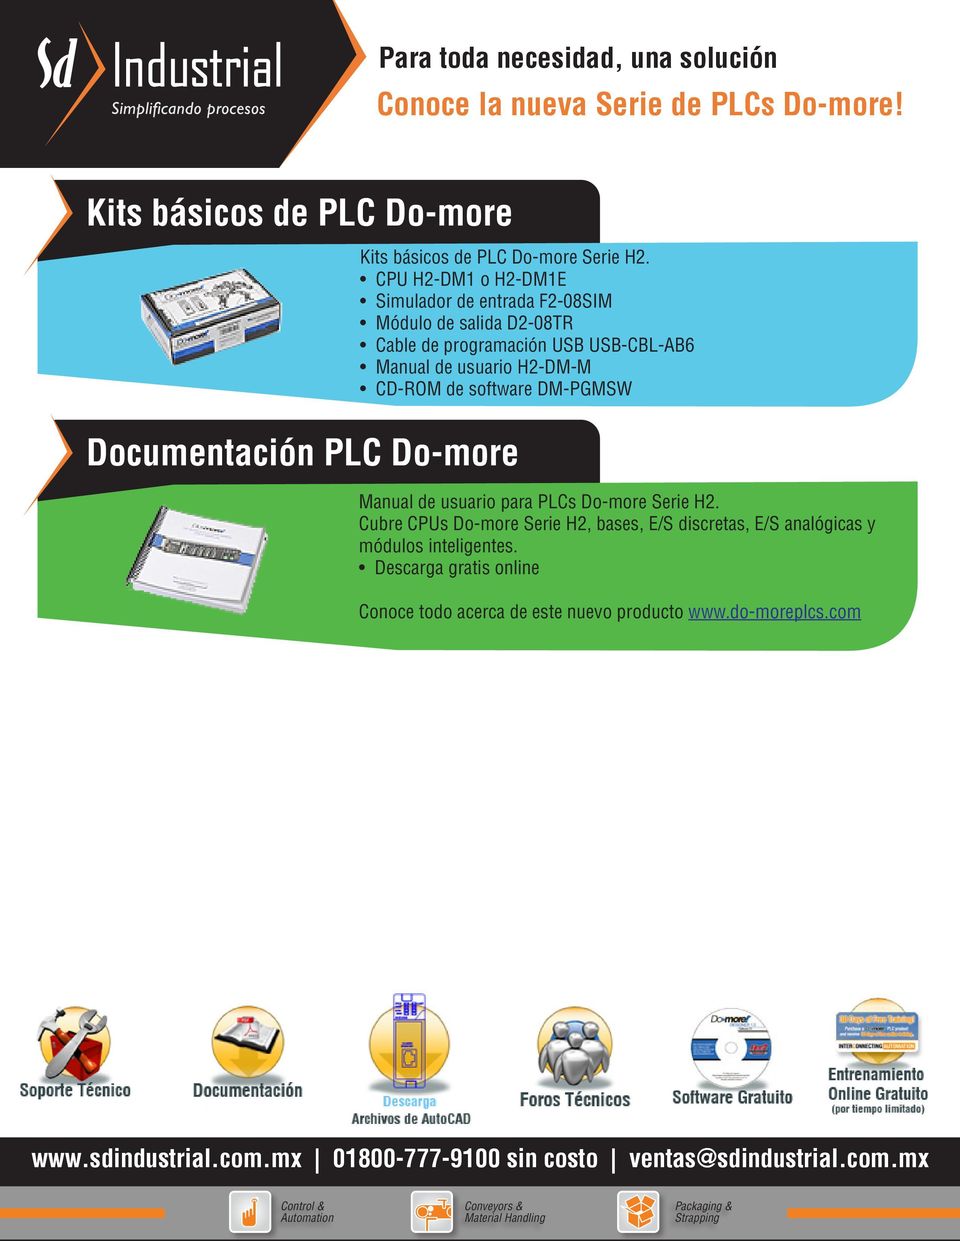 Manual de usuario H2-DM-M CD-ROM de software DM-PGMSW Manual de usuario para PLCs Do-more Serie H2.